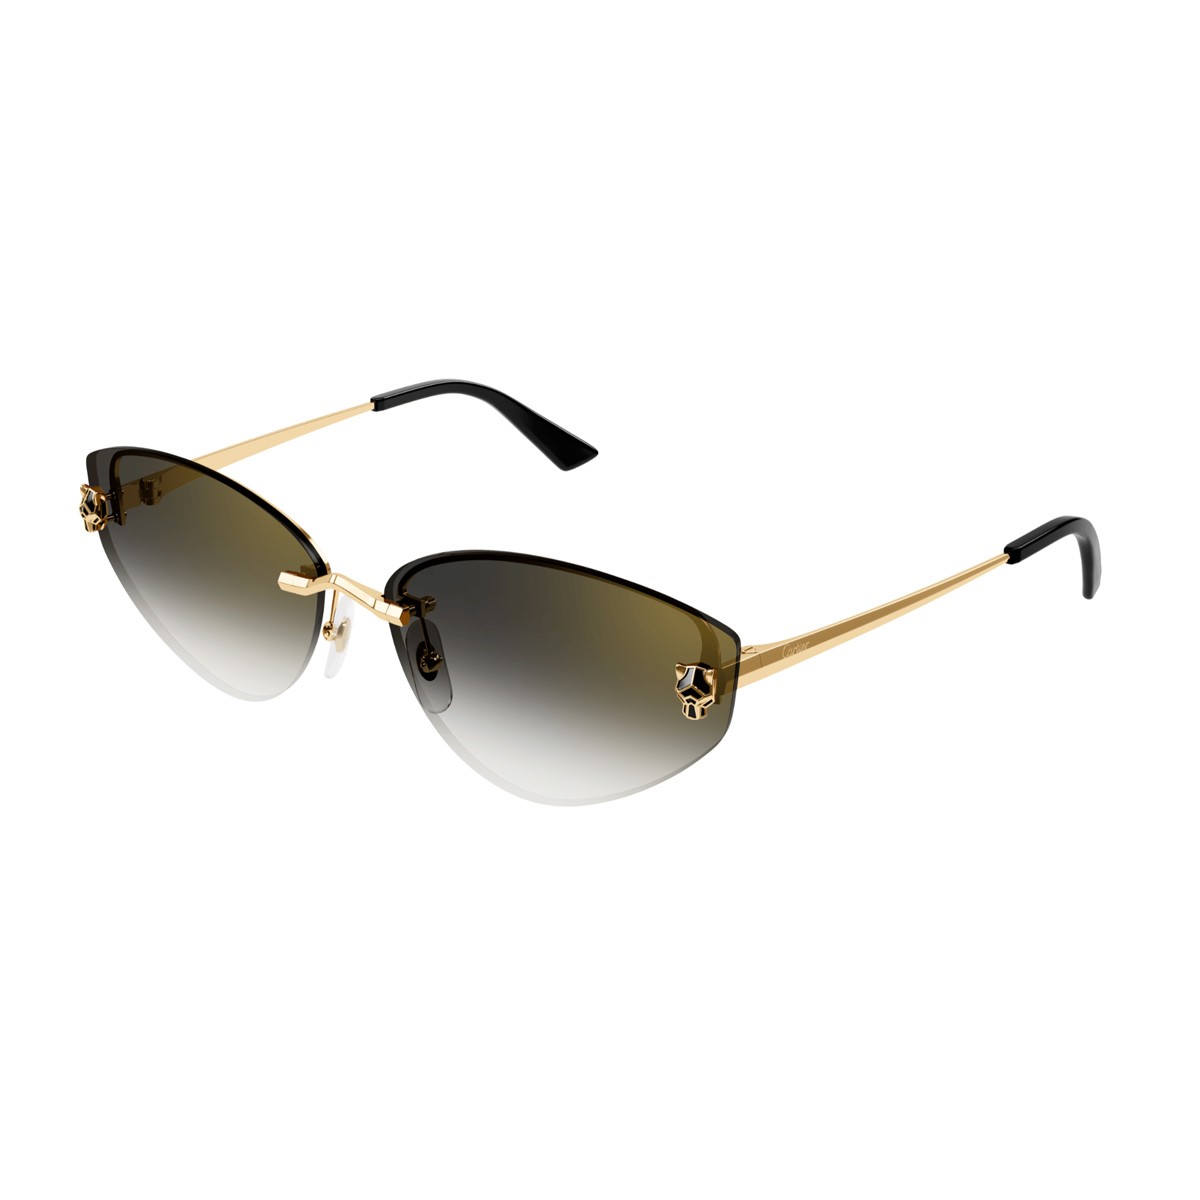 Cartier Sunglasses For Women Holiday Gift Ideas | Cartier sunglasses, Sunglasses  women designer, Sunglasses women